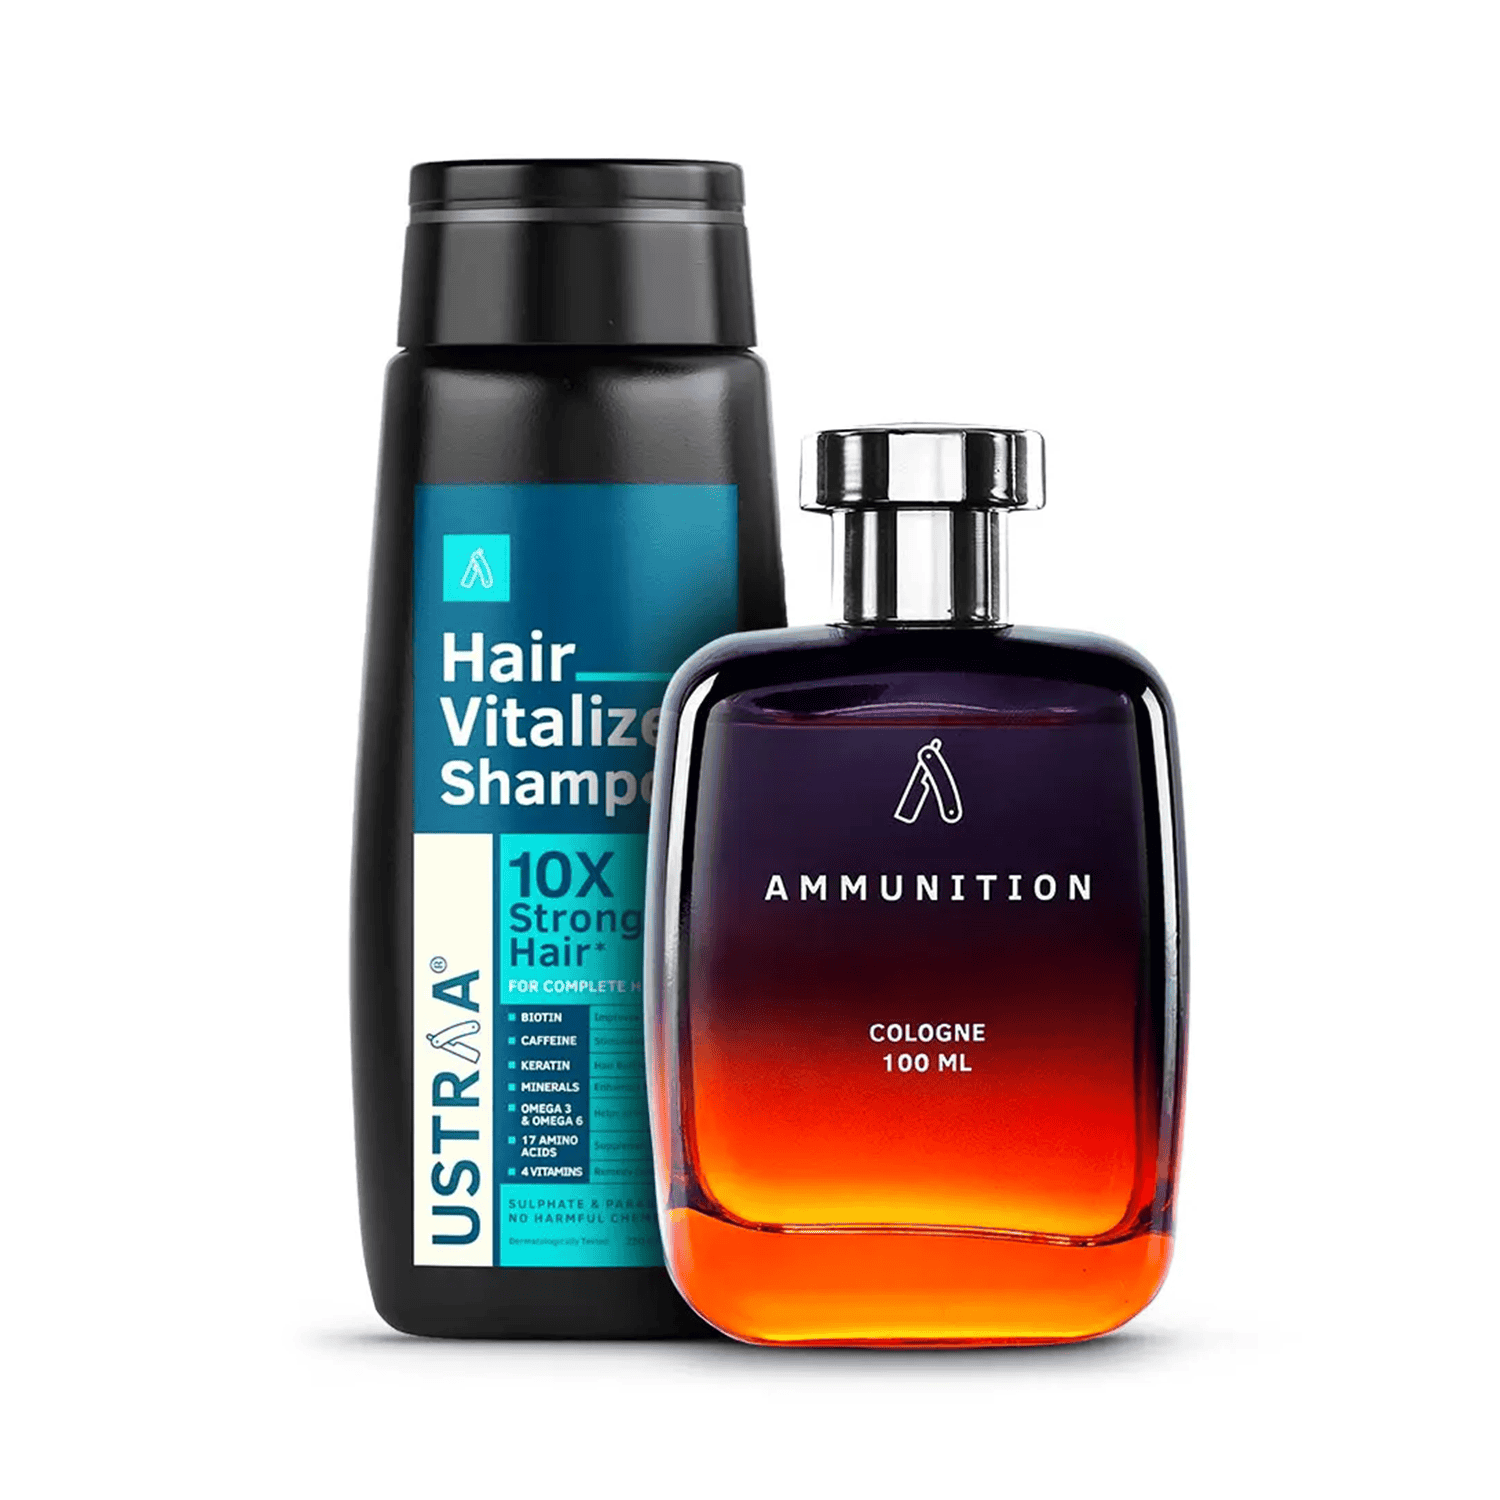 Ustraa Hair Vitalizer Shampoo & Ammunition Cologne Combo